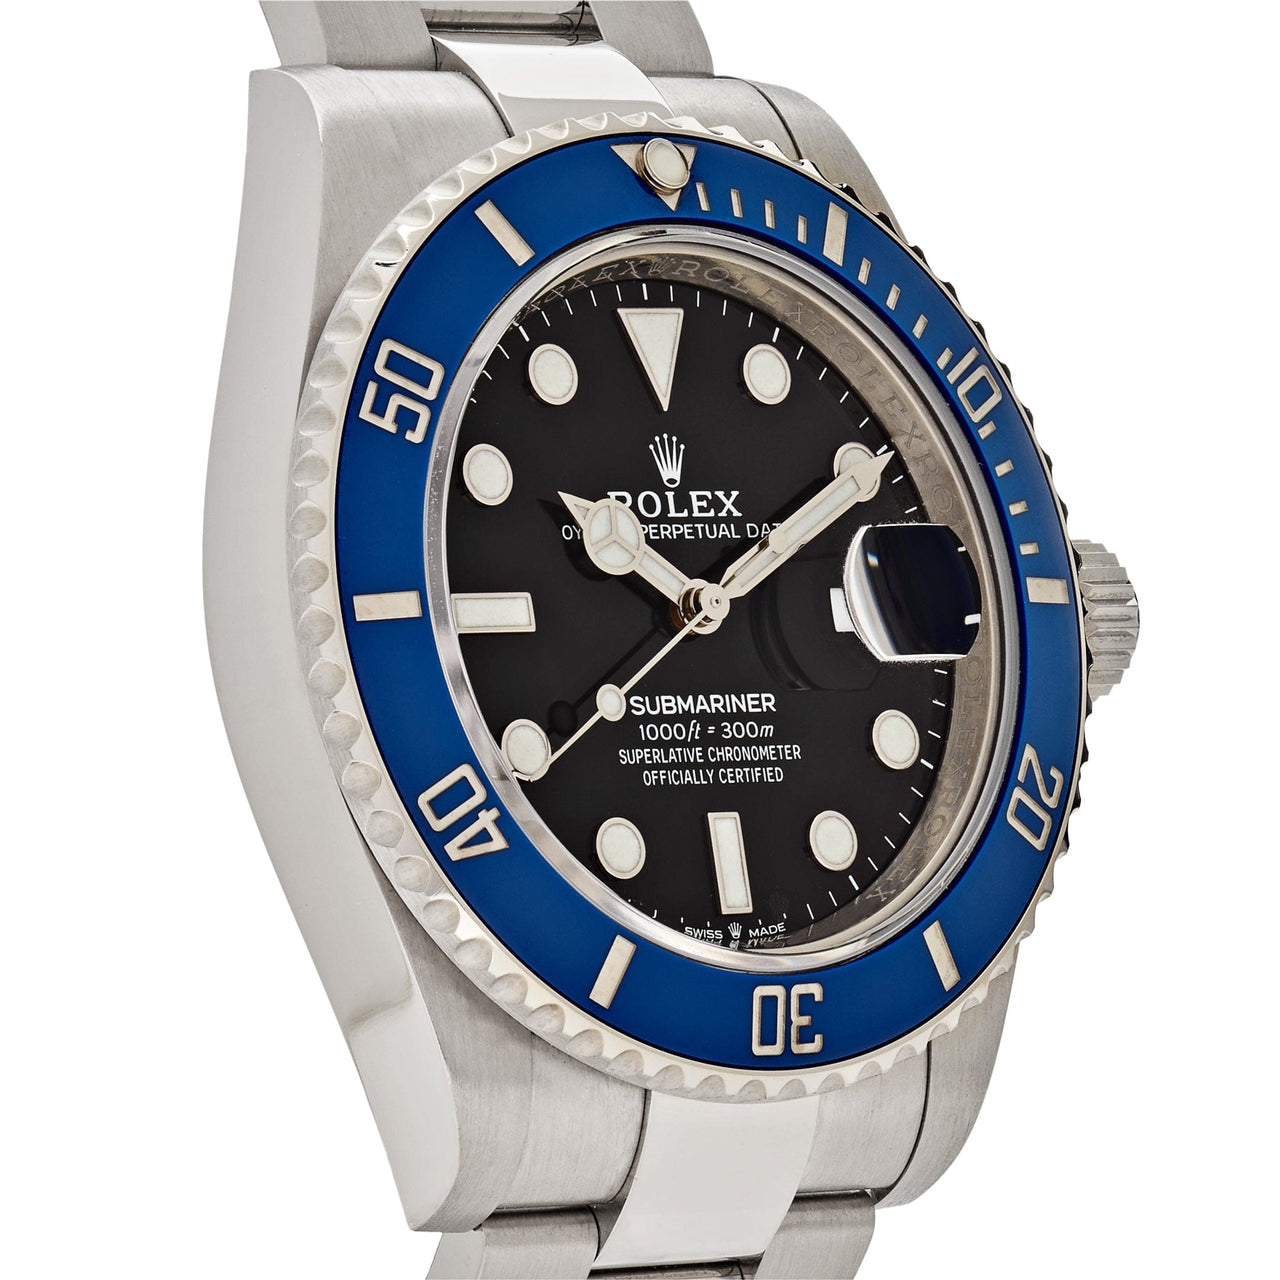 Rolex Submariner Date 41 White Gold Black Dial Blue Bezel 126619LB (2022) wrist aficionado